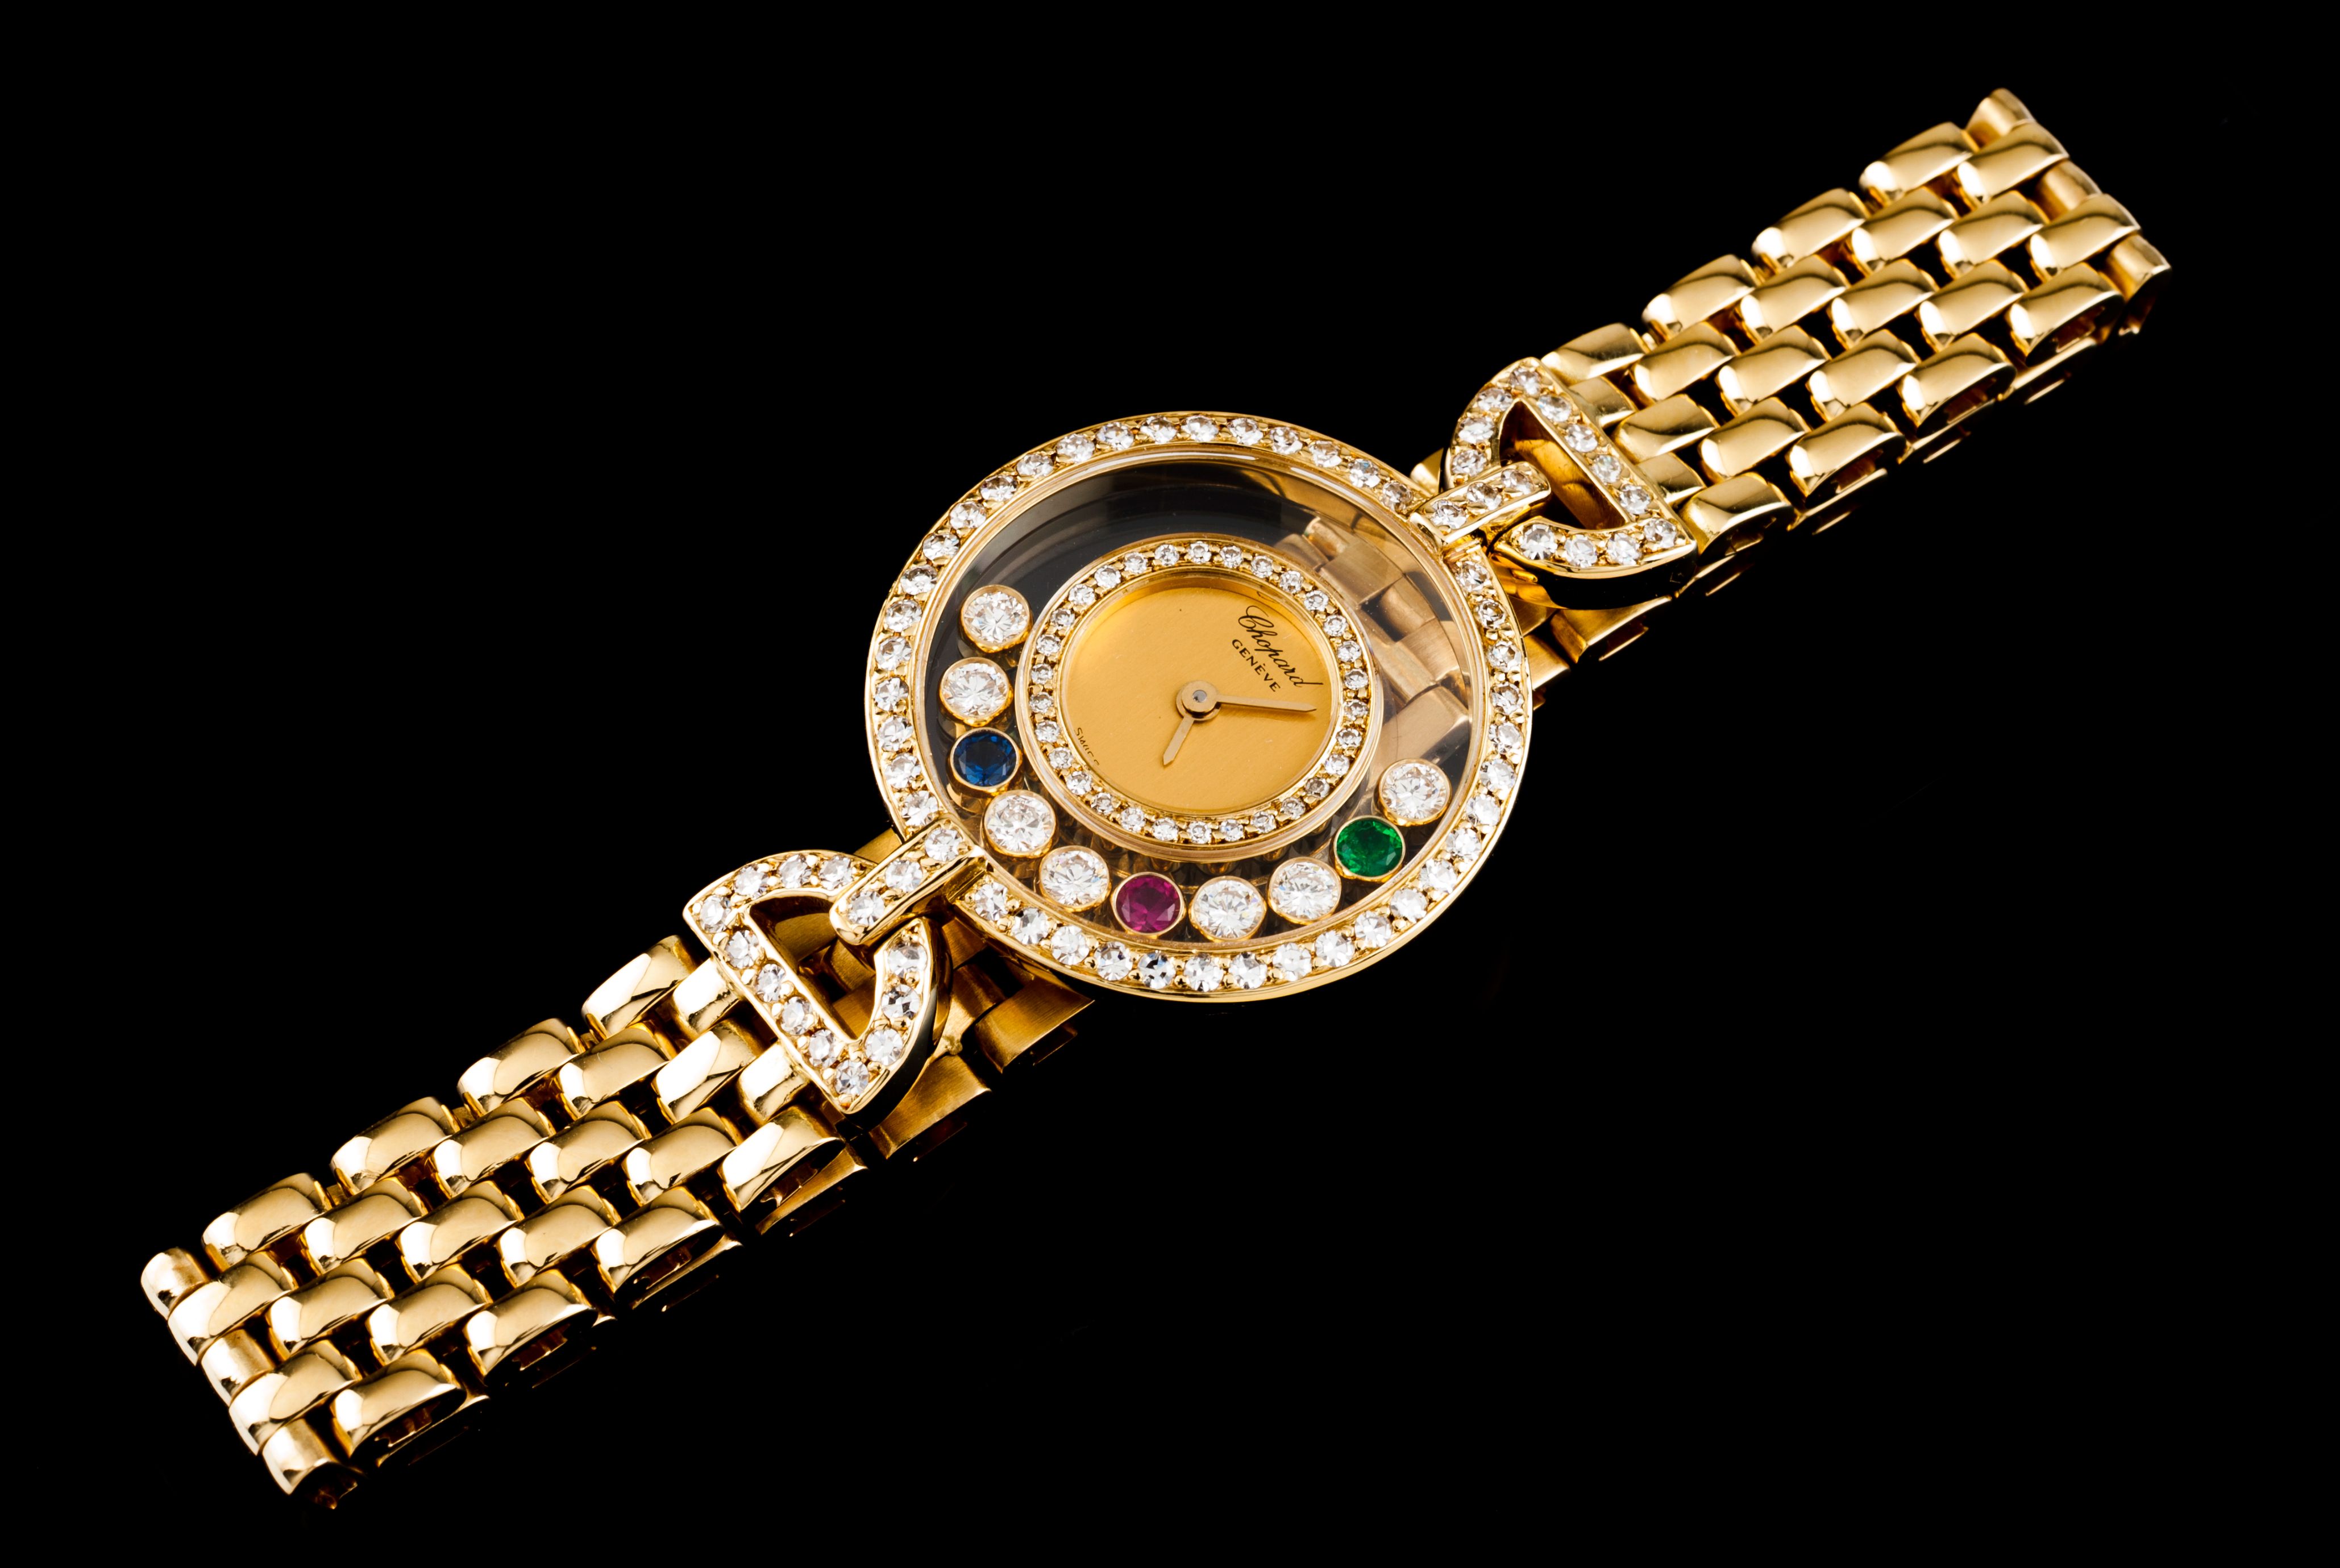 A CHOPARD wristwatch, HAPPY DIAMONDS collection